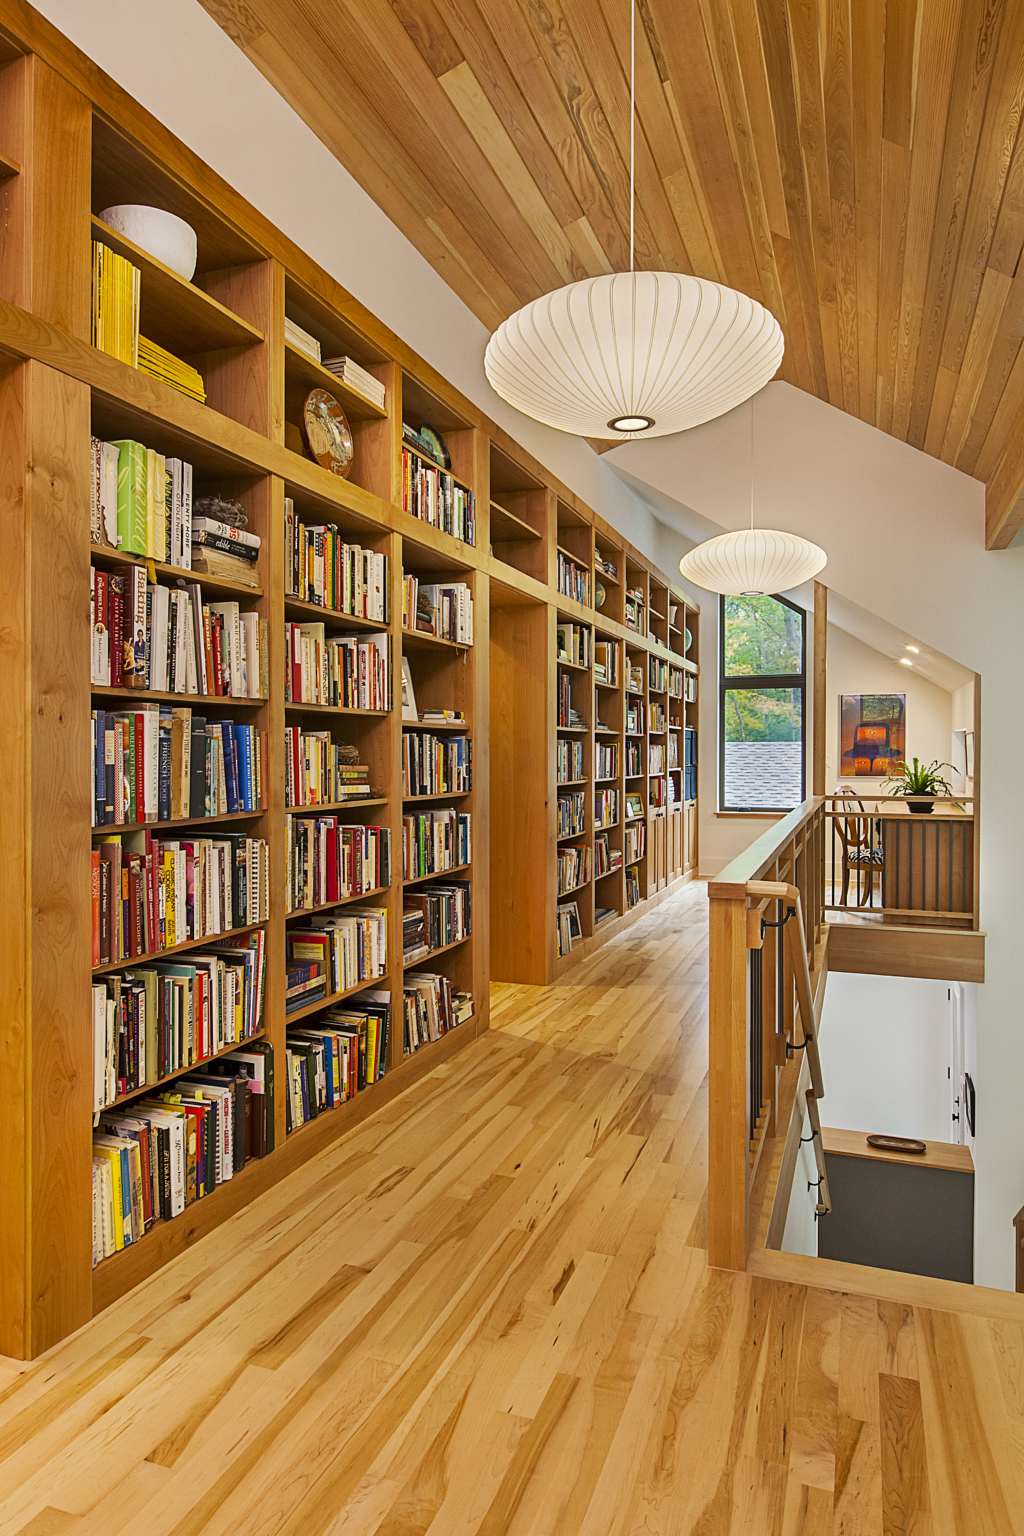 New home in Ann Arbor, Michigan - library loft